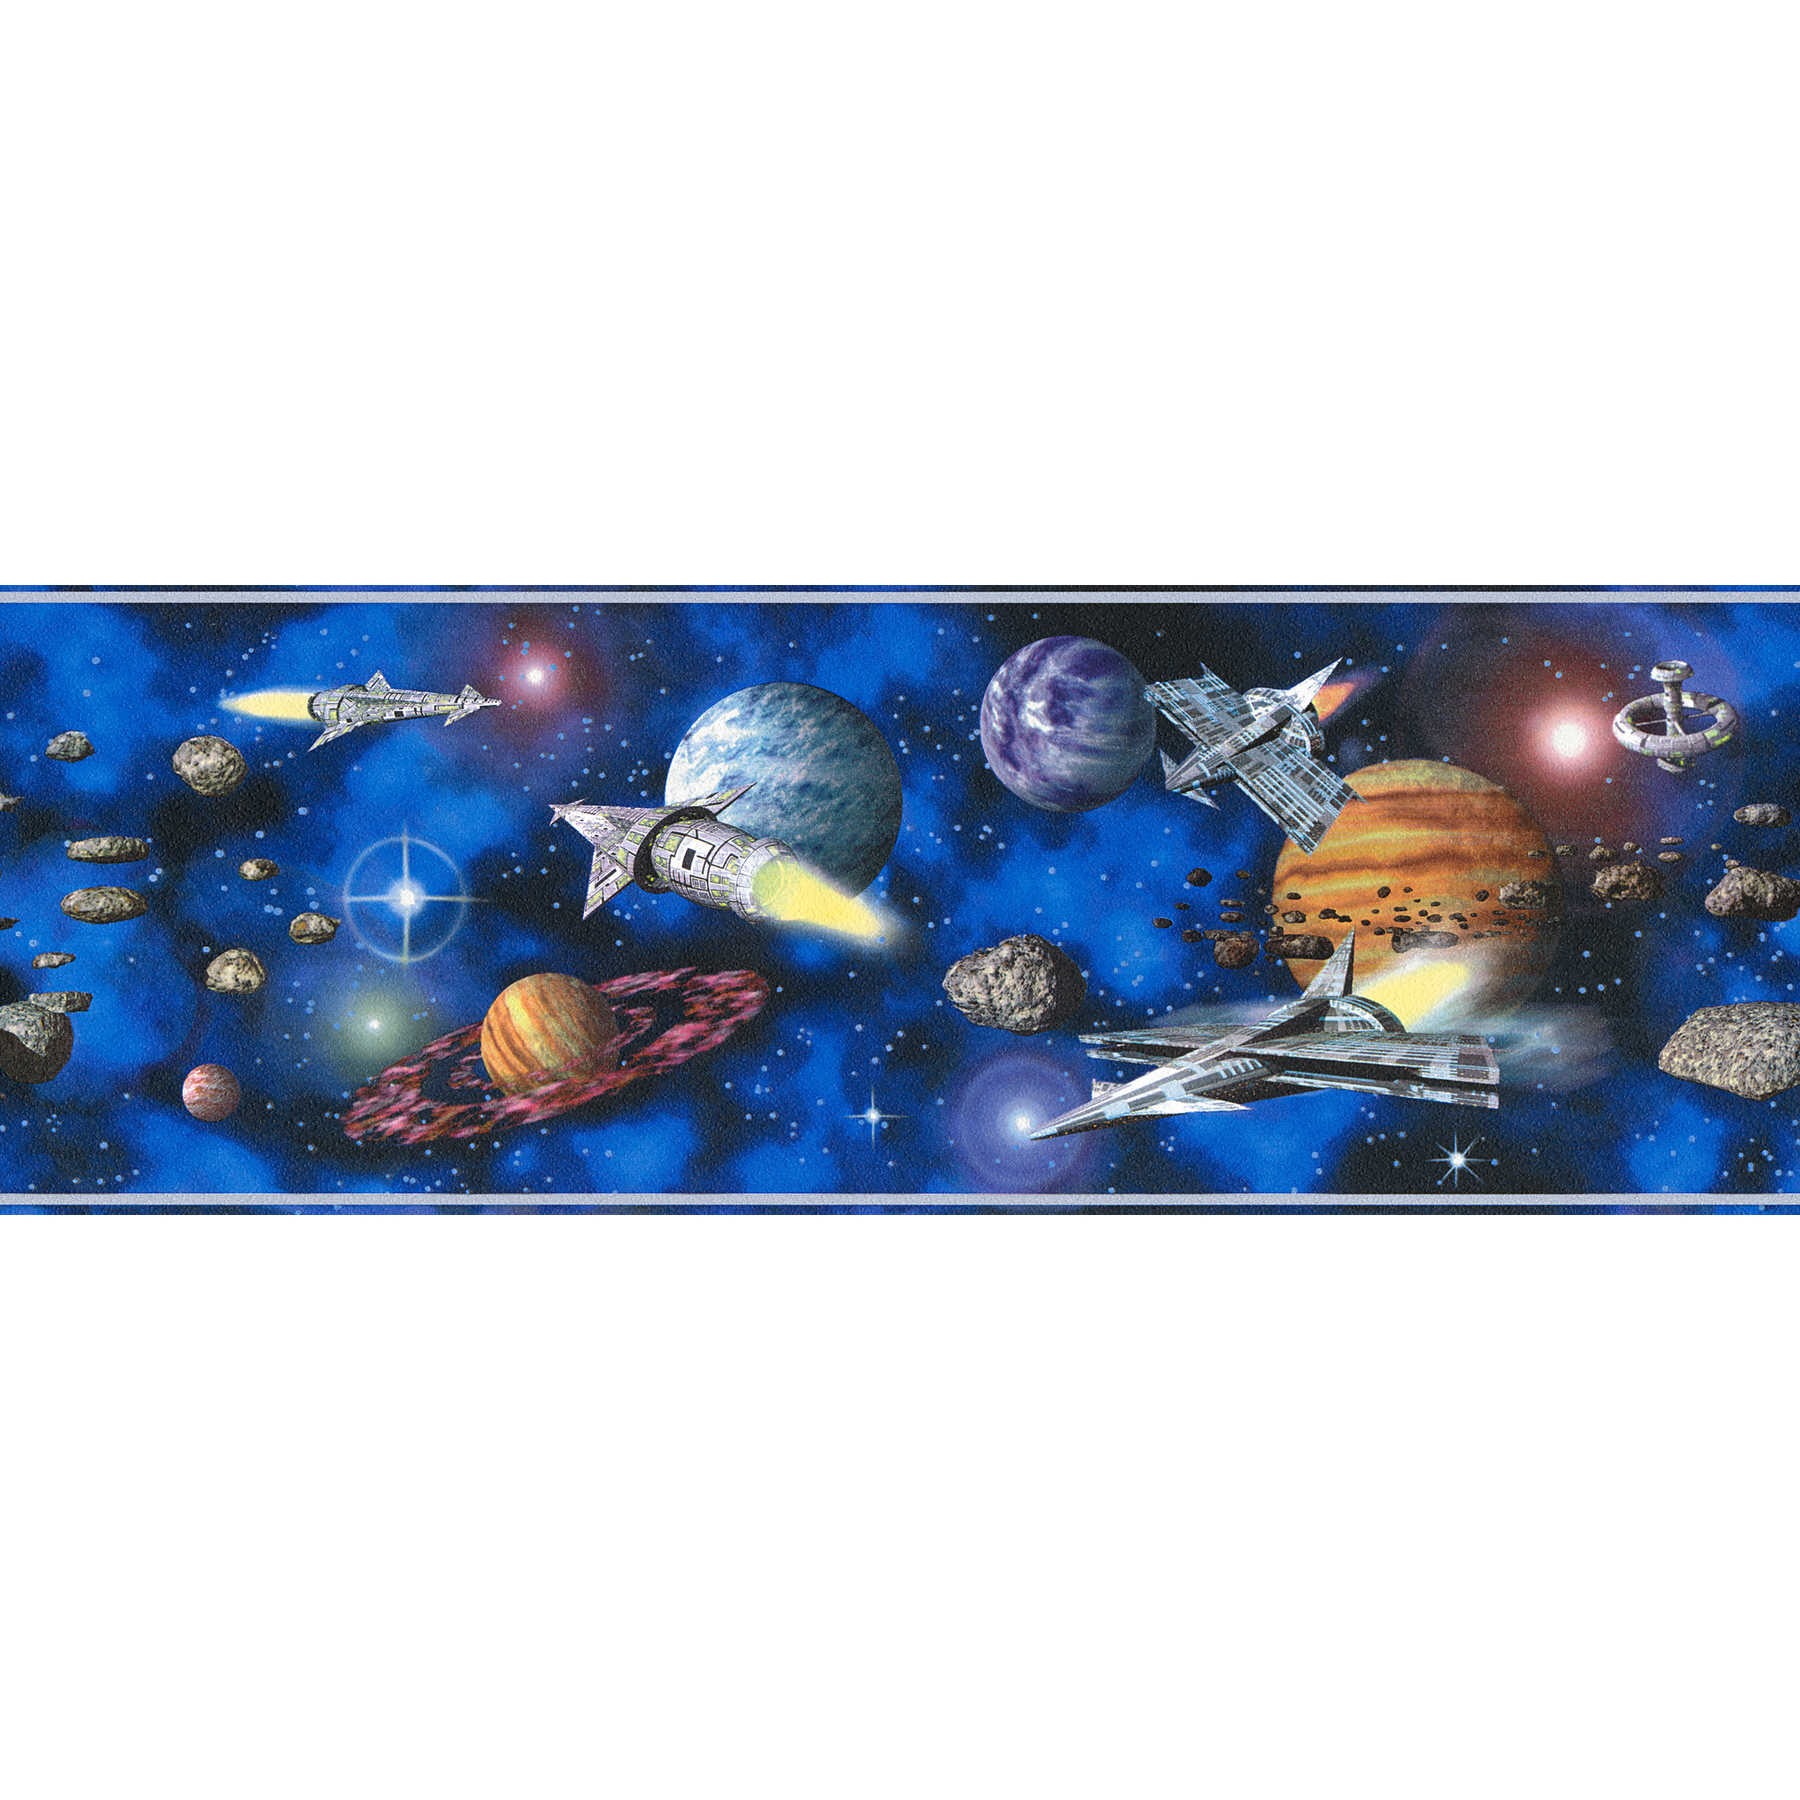         Universe wallpaper border for Nursery - Blue, Colorful
    